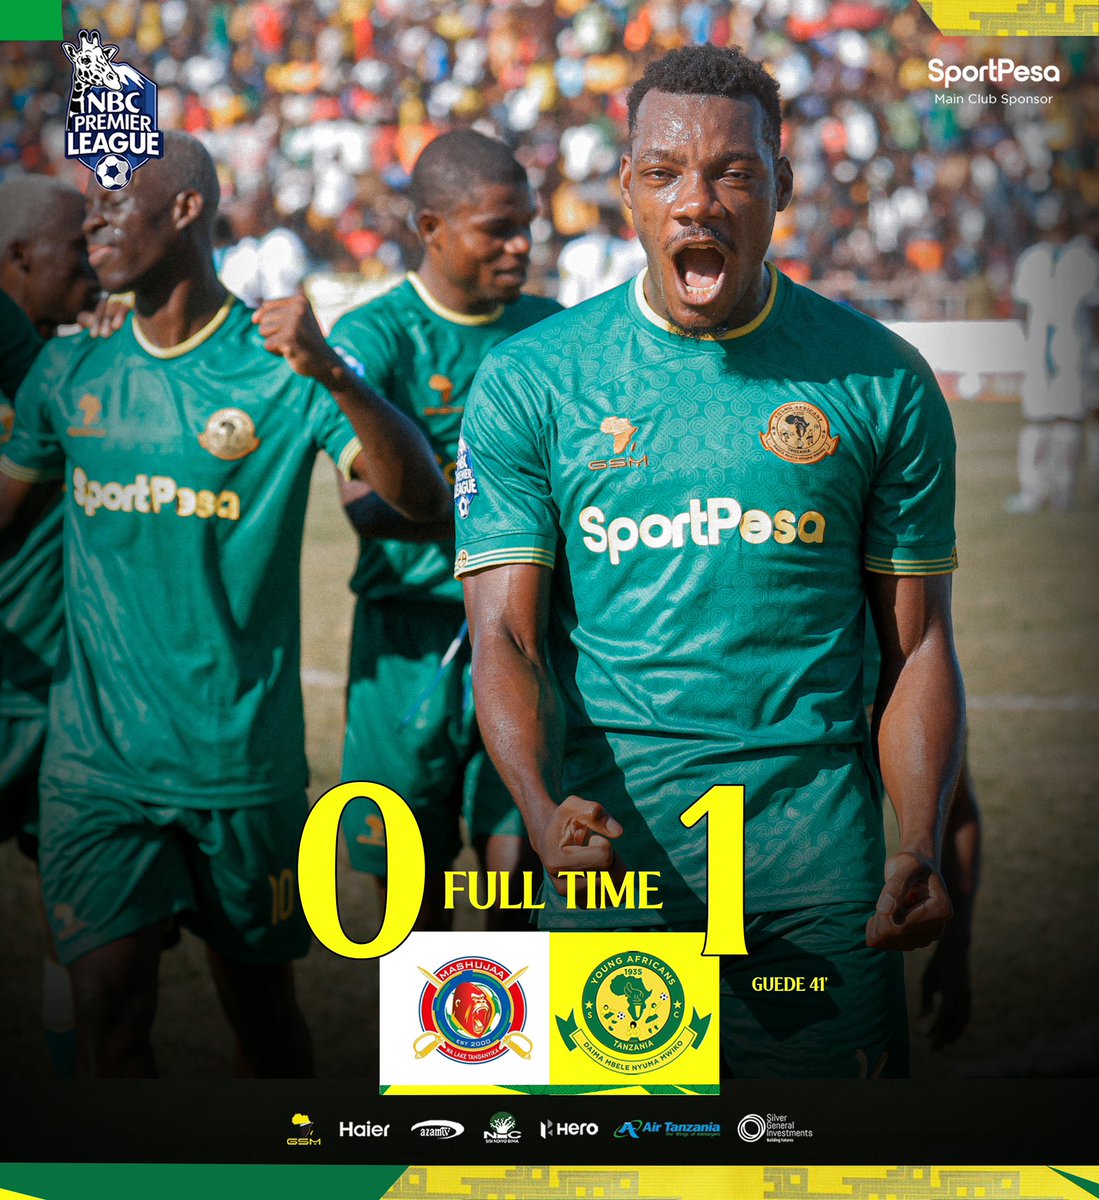 𝐅𝐔𝐋𝐋 𝐓𝐈𝐌𝐄⏱️| #NBCPremierLeague

Mashujaa FC 0-1 Young Africans SC

A hard-fought win at Lake Tanganyika.

#TheClubAboveAll
#DaimaMbeleNyumaMwiko